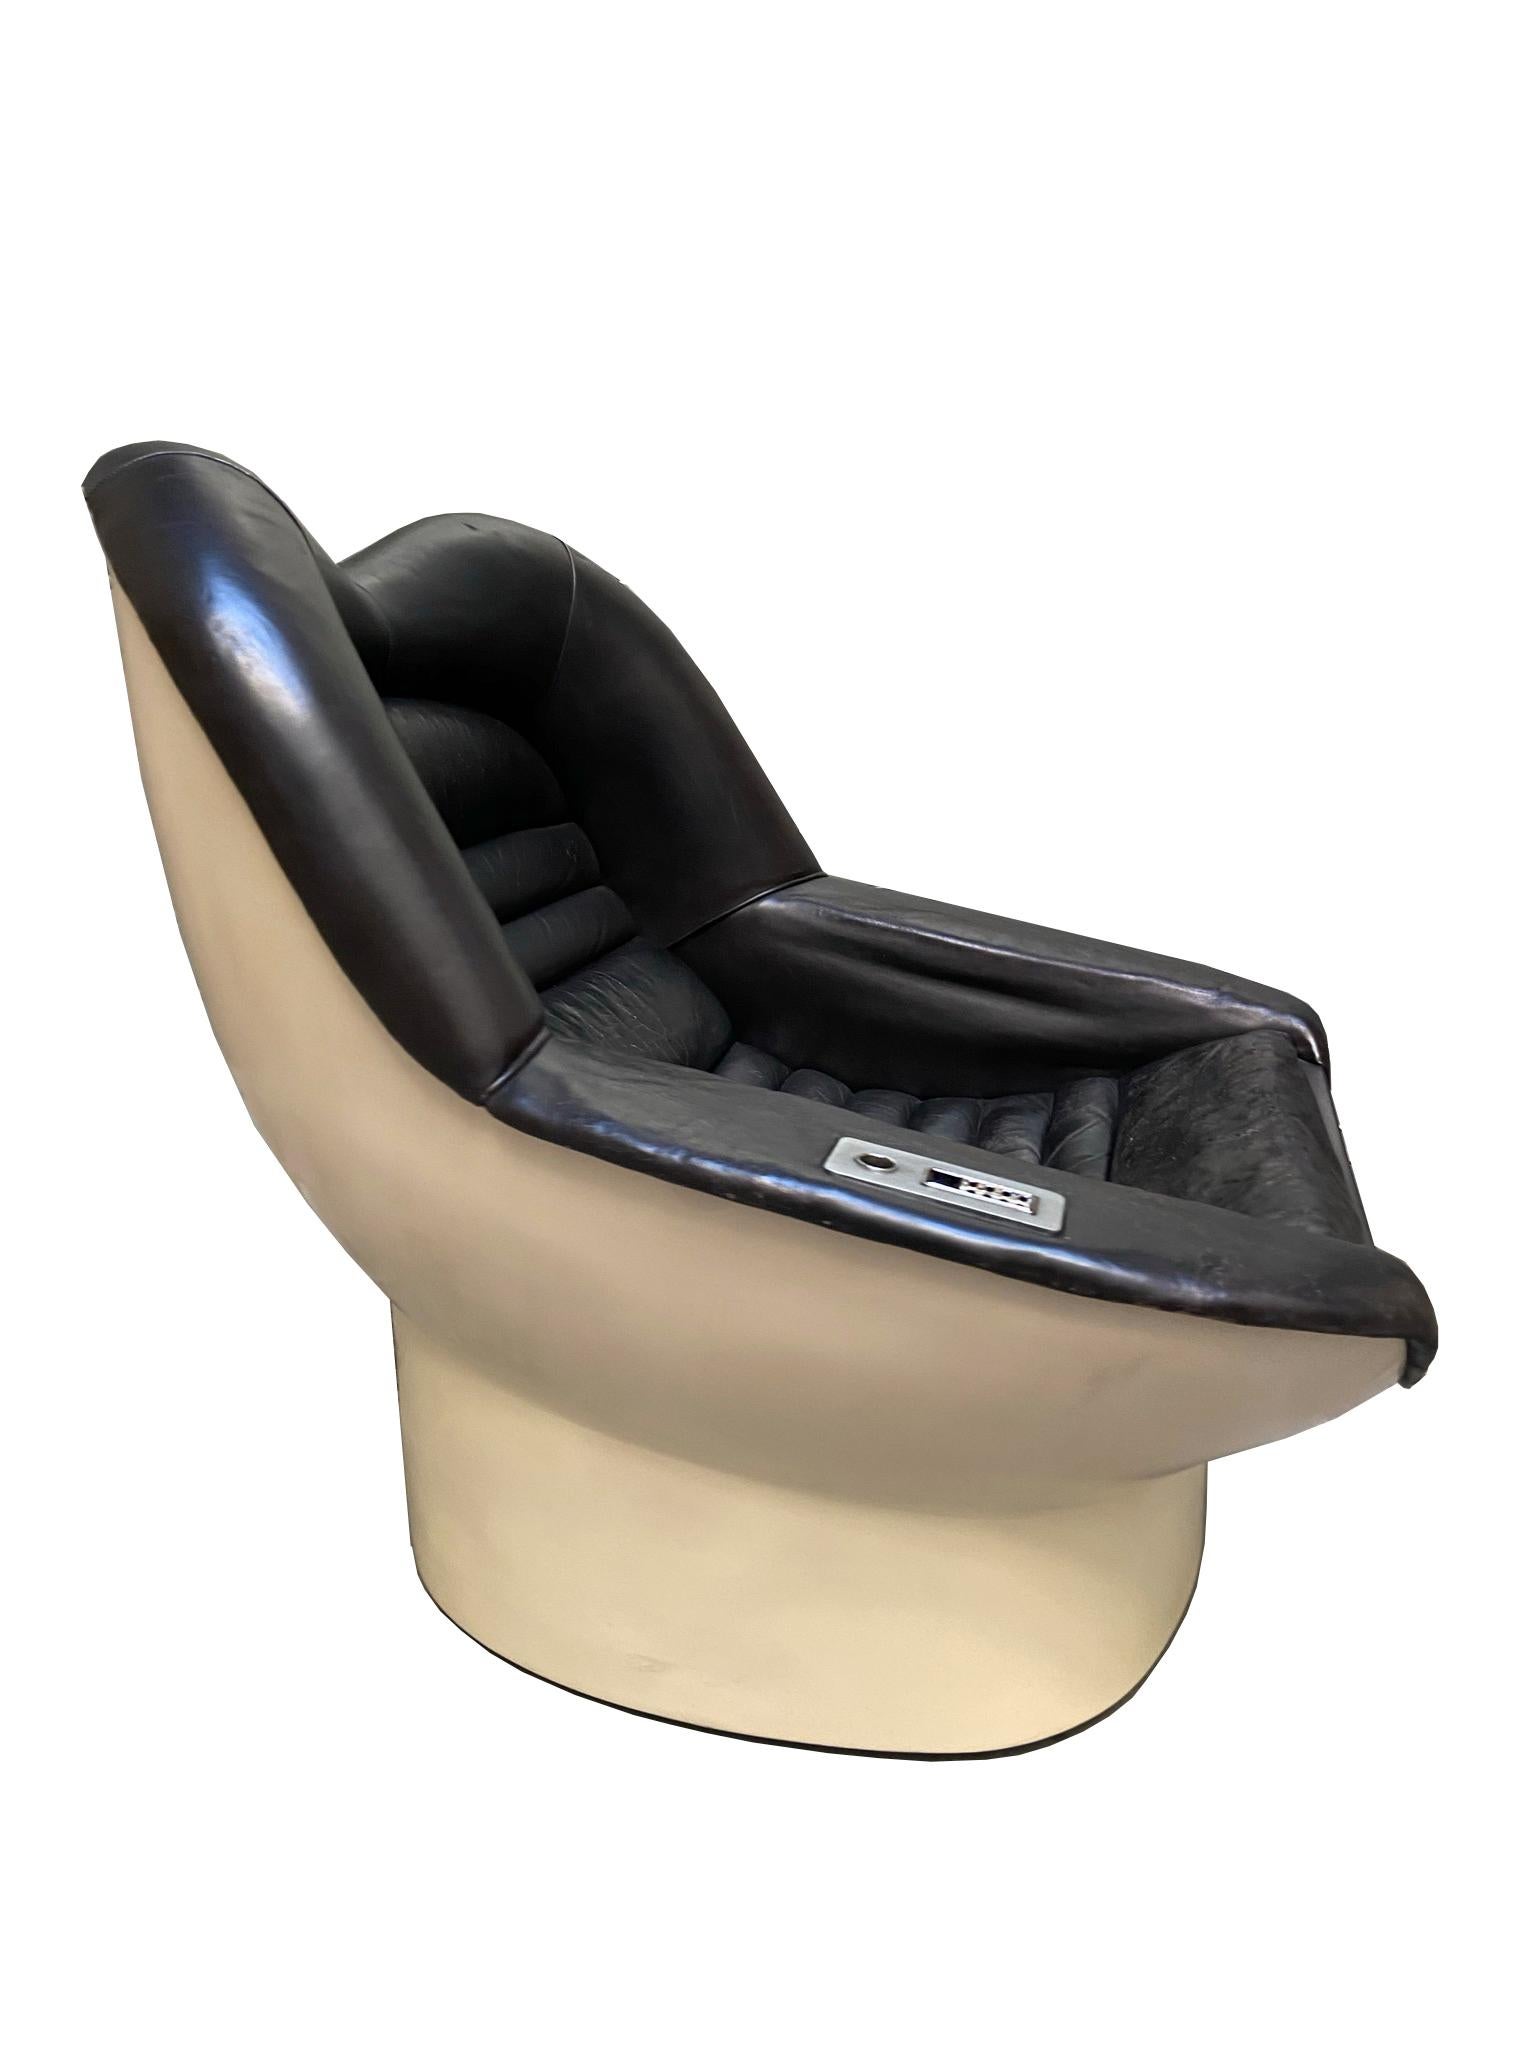 Very rare Alda model armchair made of fiberglass and leather. Cesare Casati design for Comfort, Italy, 1966.